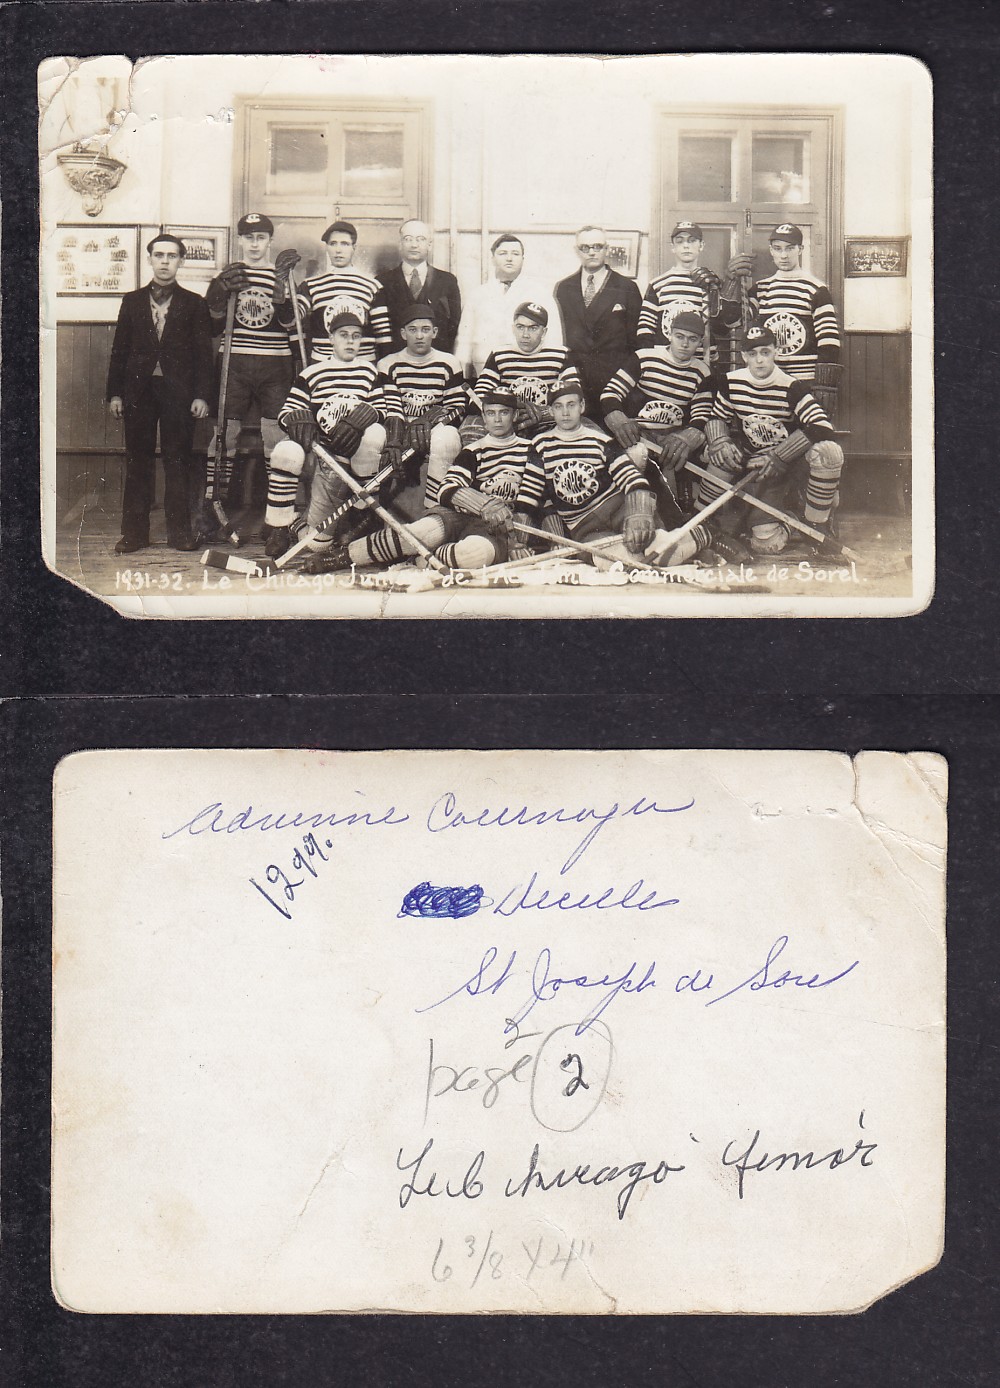 1931-32 SOREL HOCKEY TEAM POST CARD photo